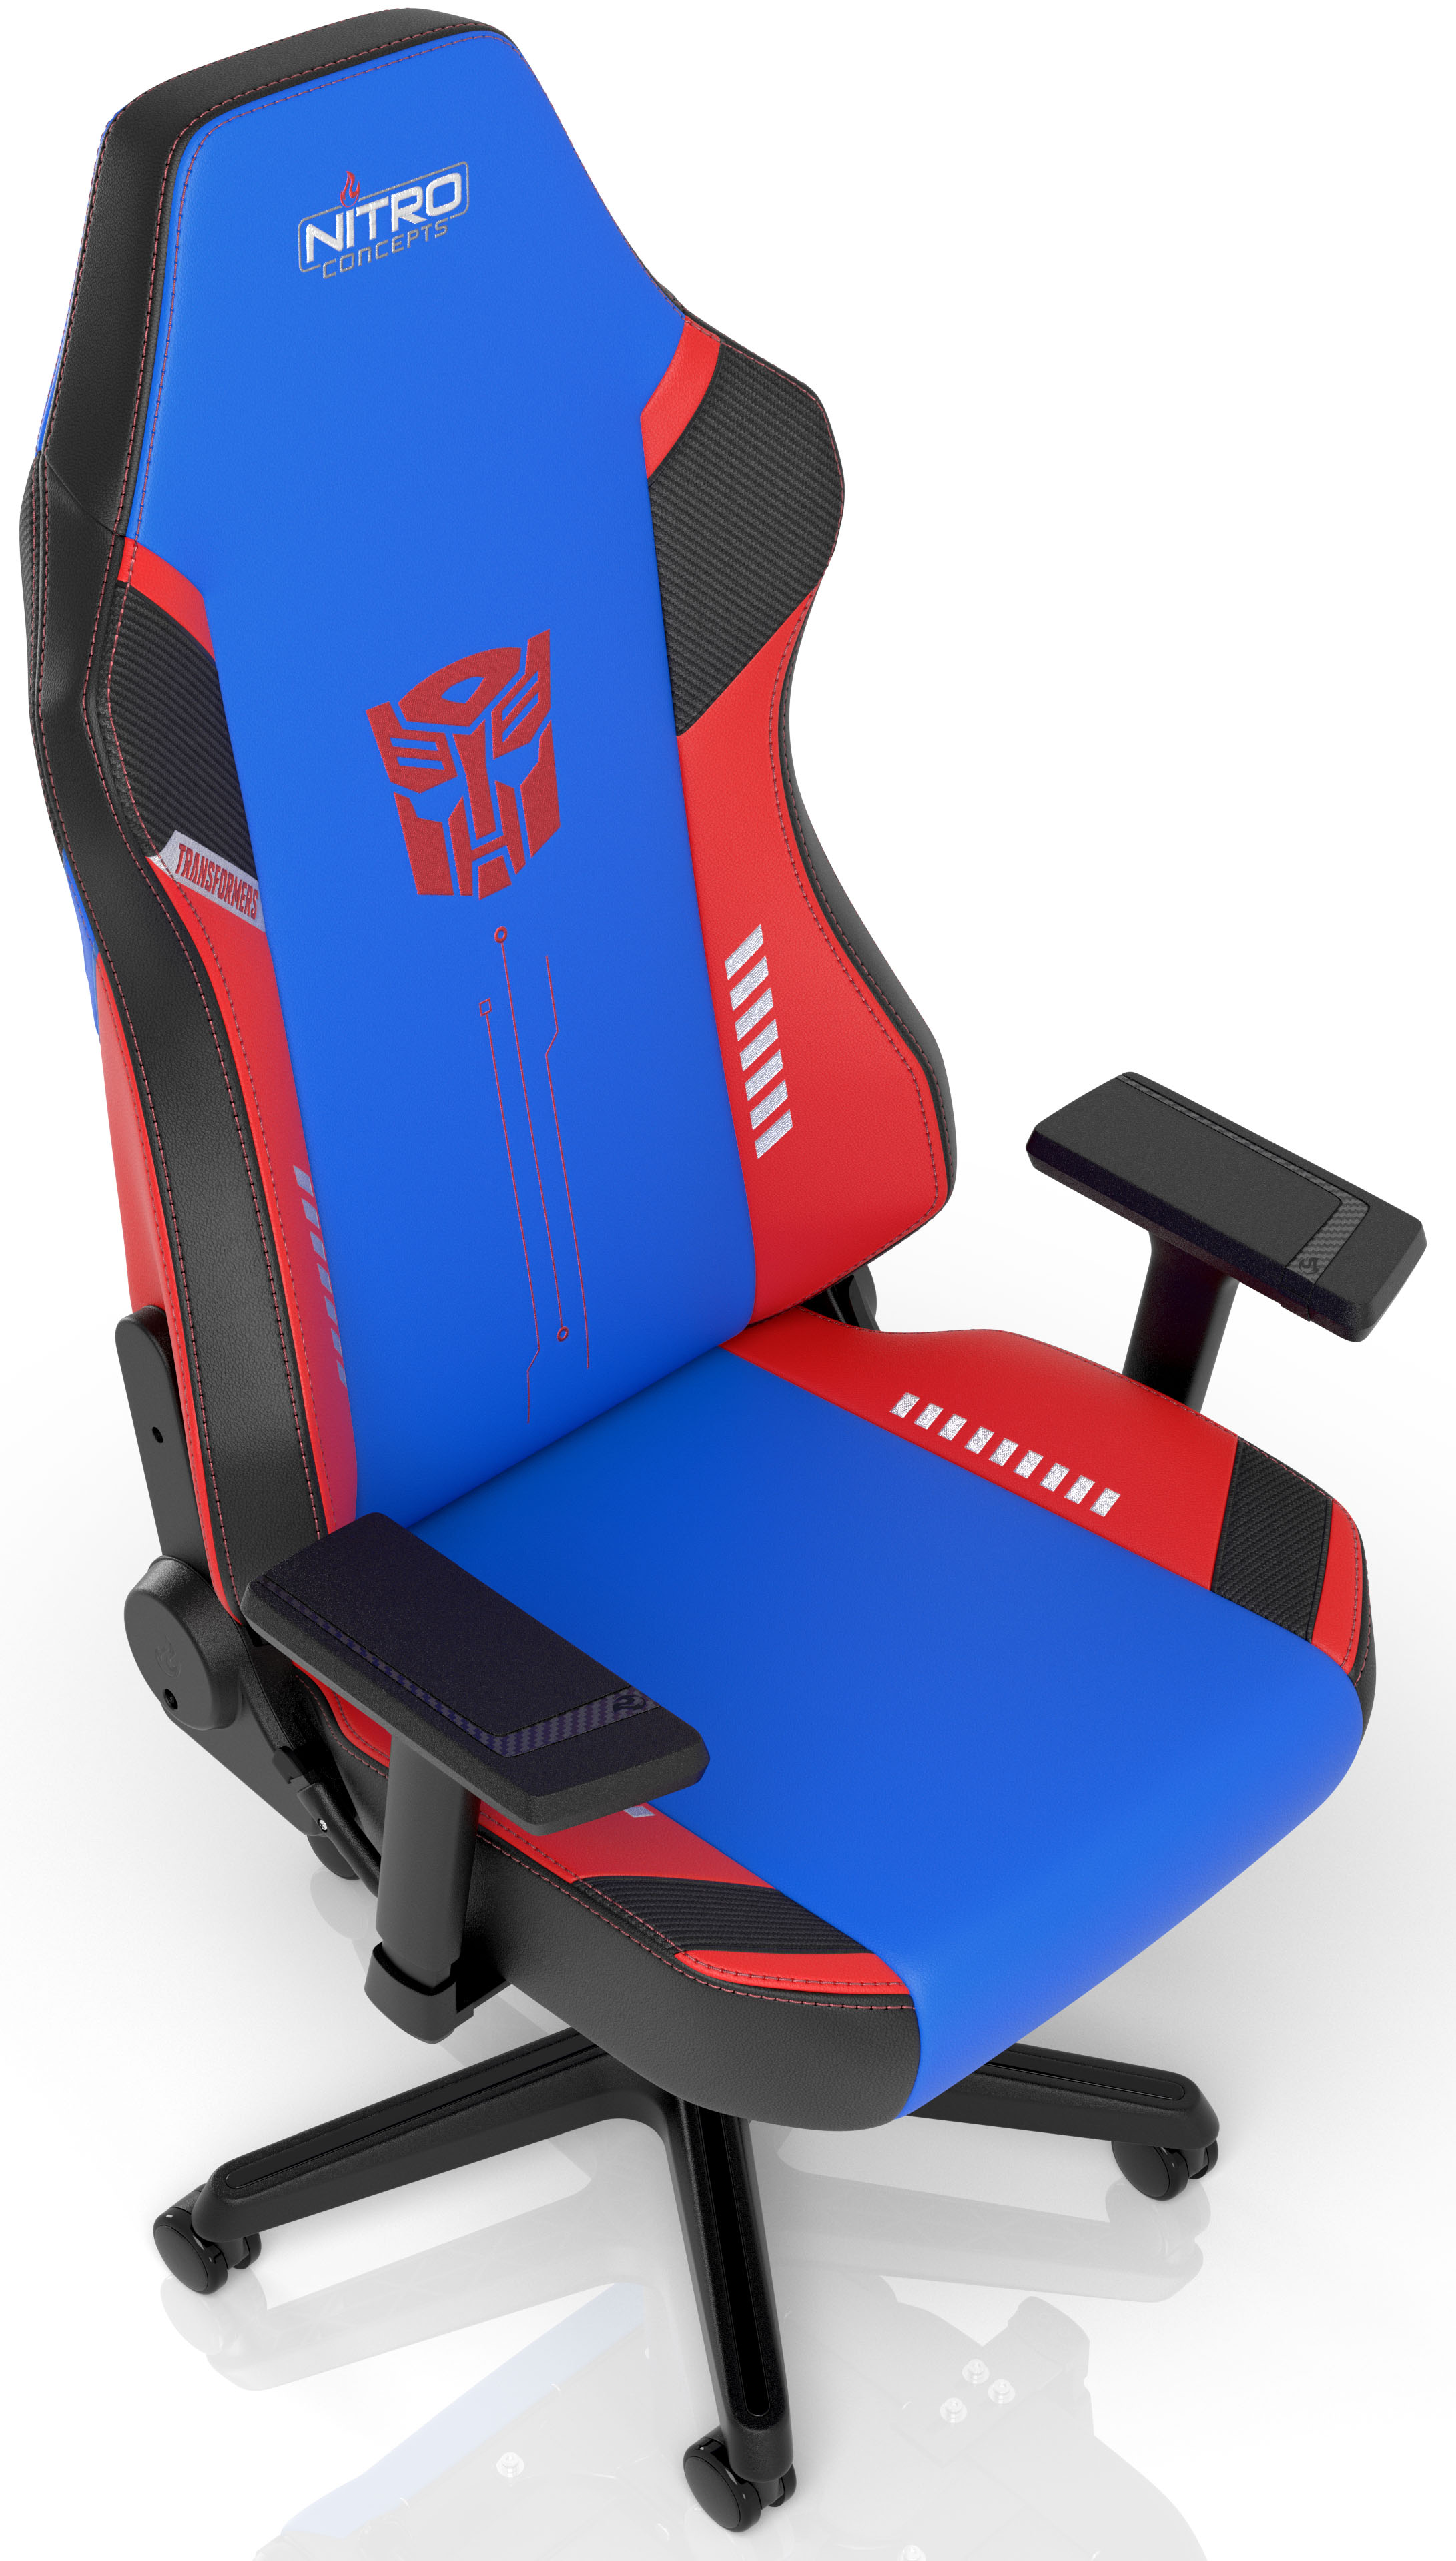 Nitro Concepts - Cadeira Nitro Concepts X1000 Gaming - Transformers Optimus Prime Edition